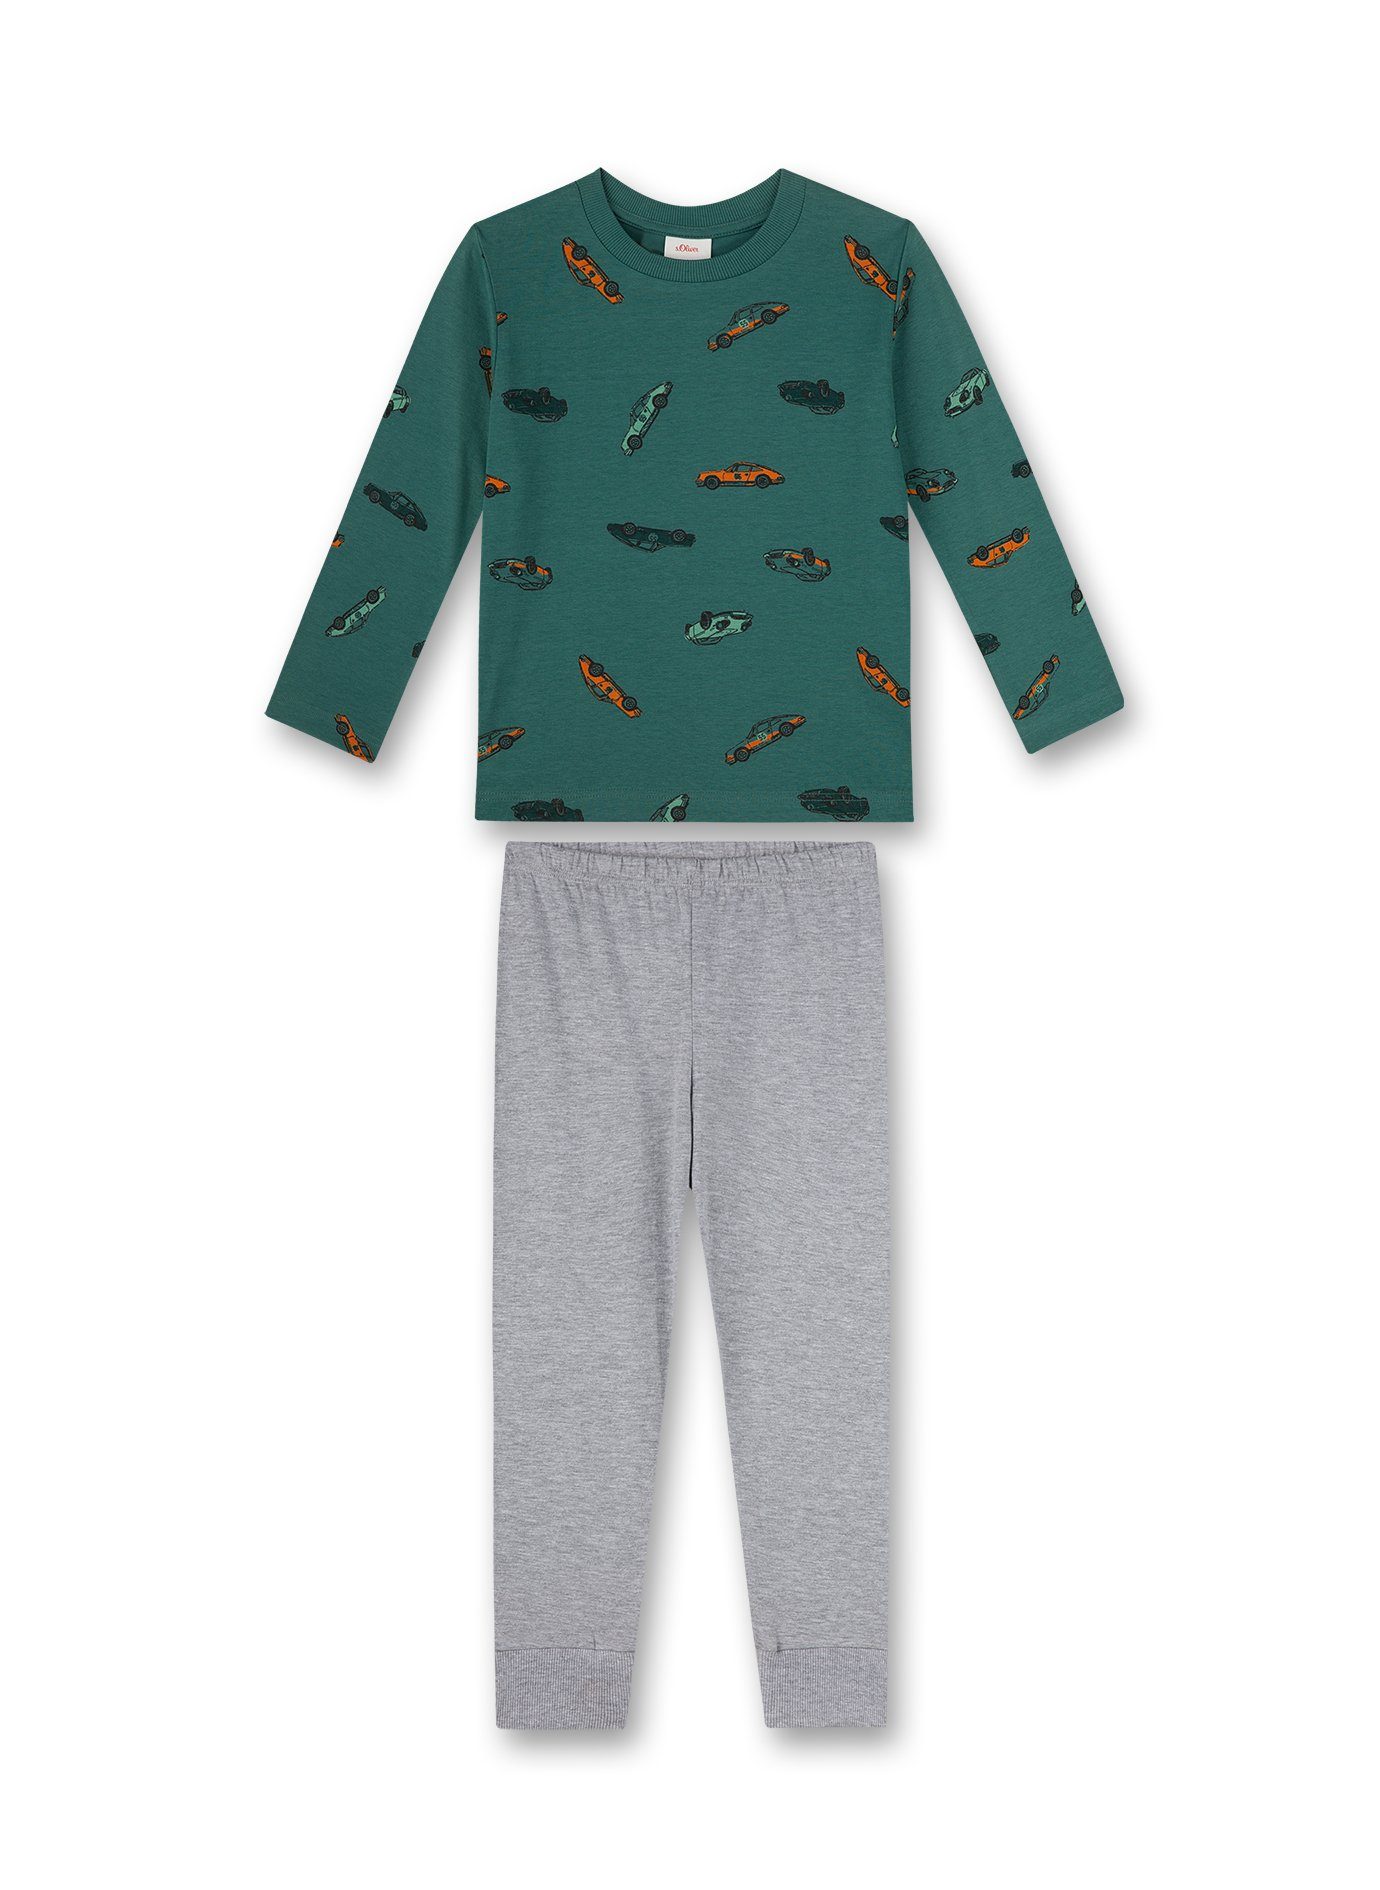 s.Oliver Junior Pyjama (2 lang grün Pyjama Rennauto Jungen tlg) s.Oliver Schlafanzug grau